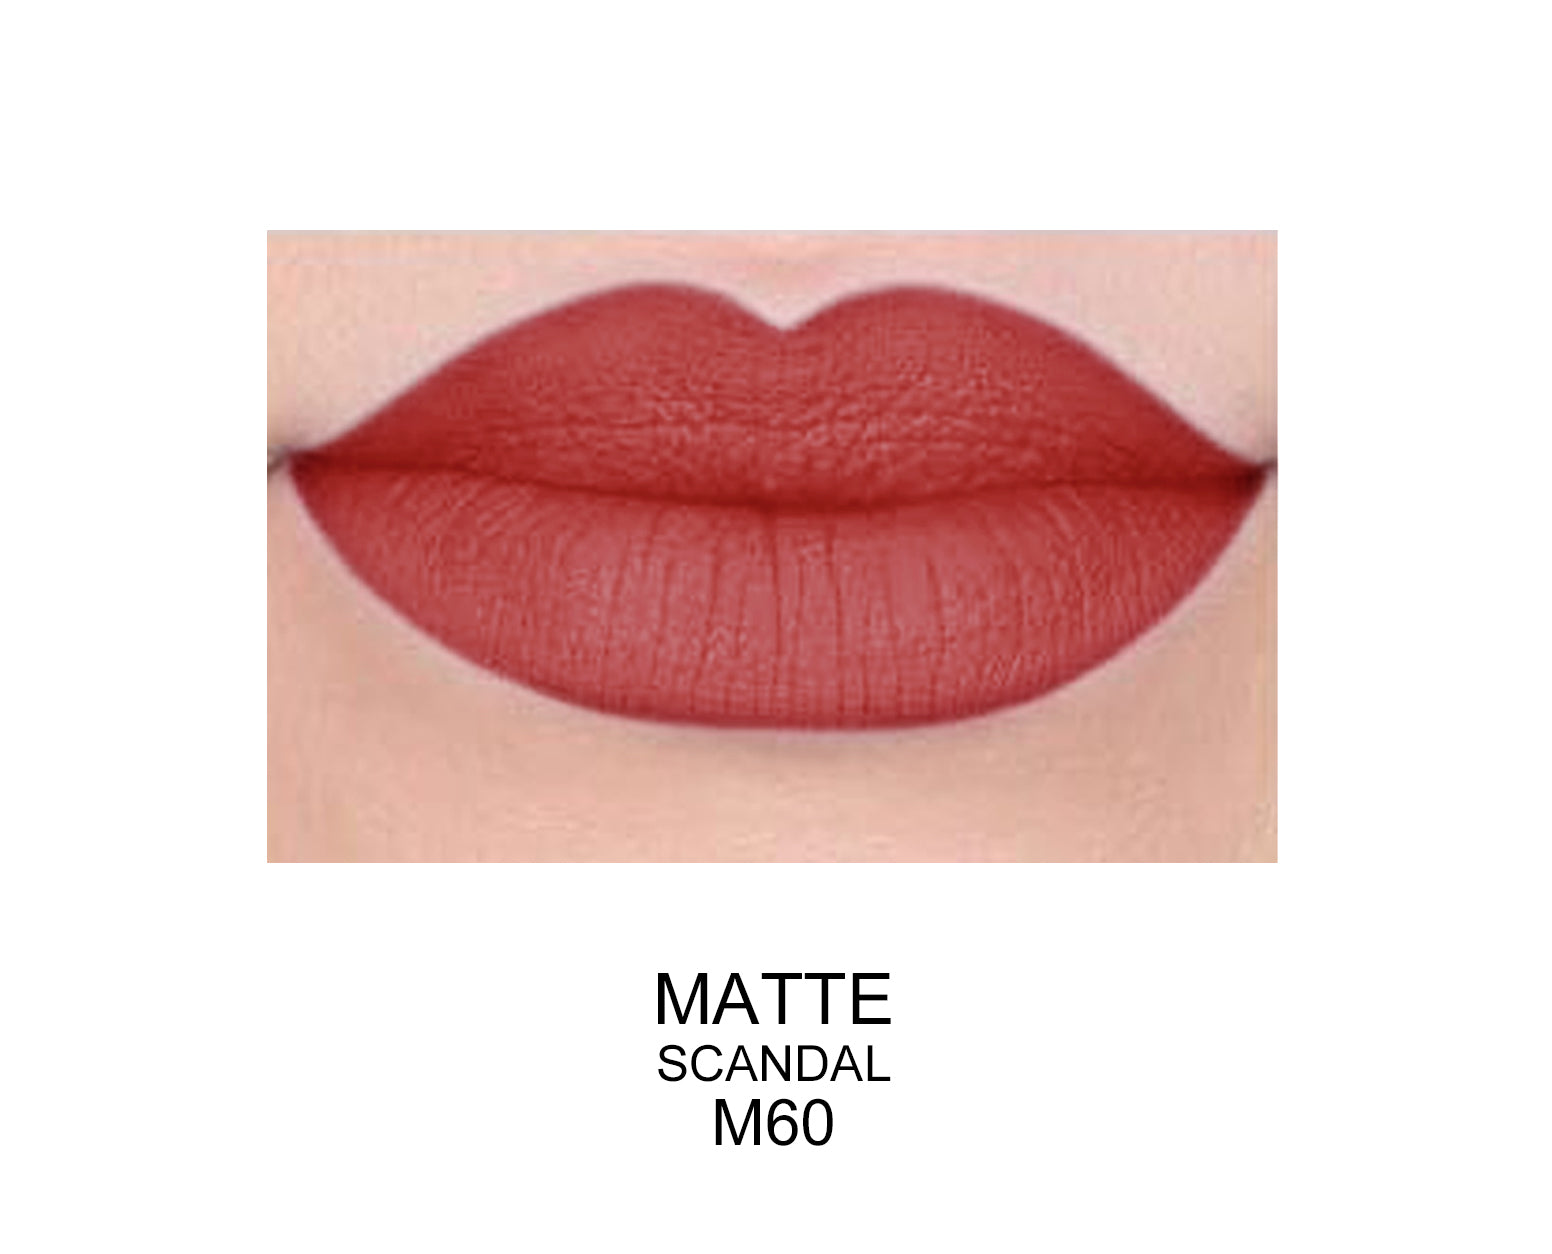 Long Lasting Matte Lip Gloss matte scandal m60